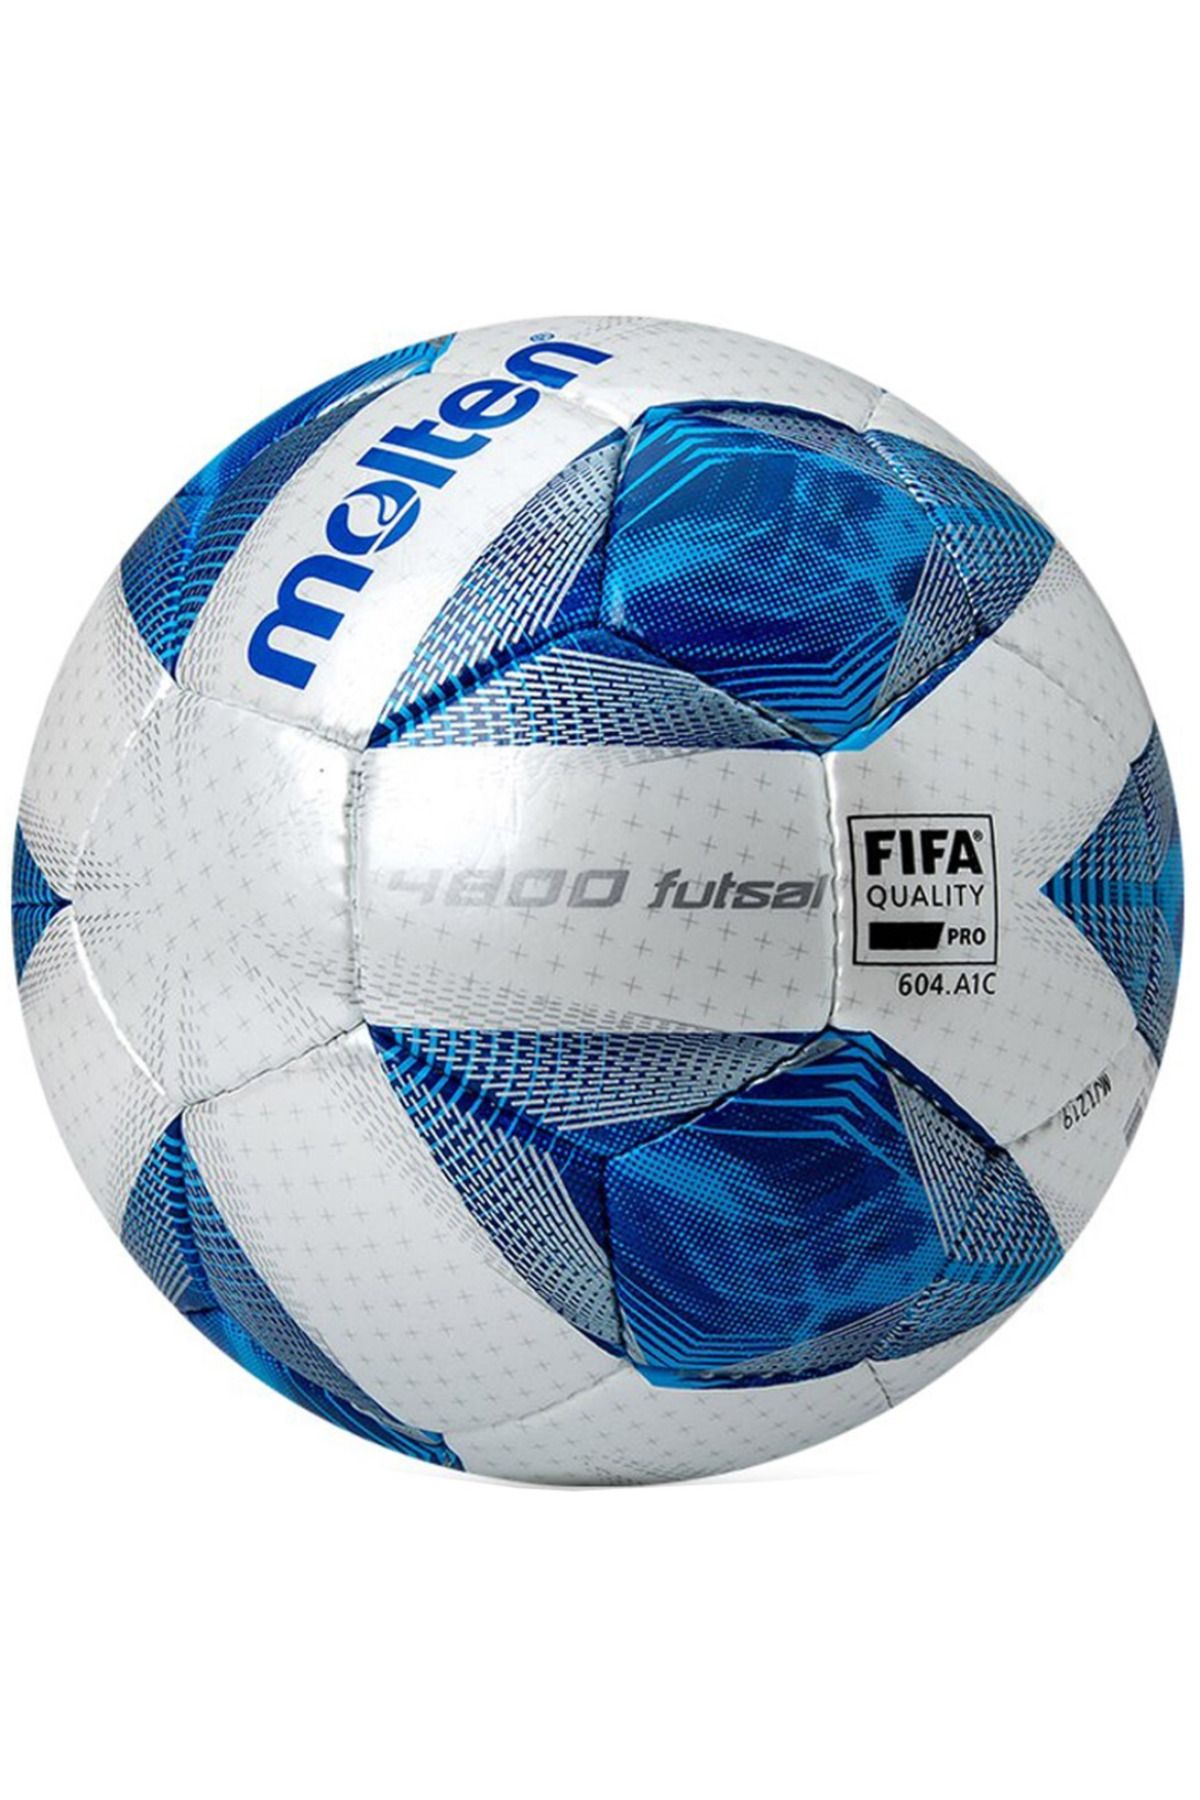 Molten F9a4800 Fıfa Onaylı 4 No Salon Futbolu (futsal) Topu